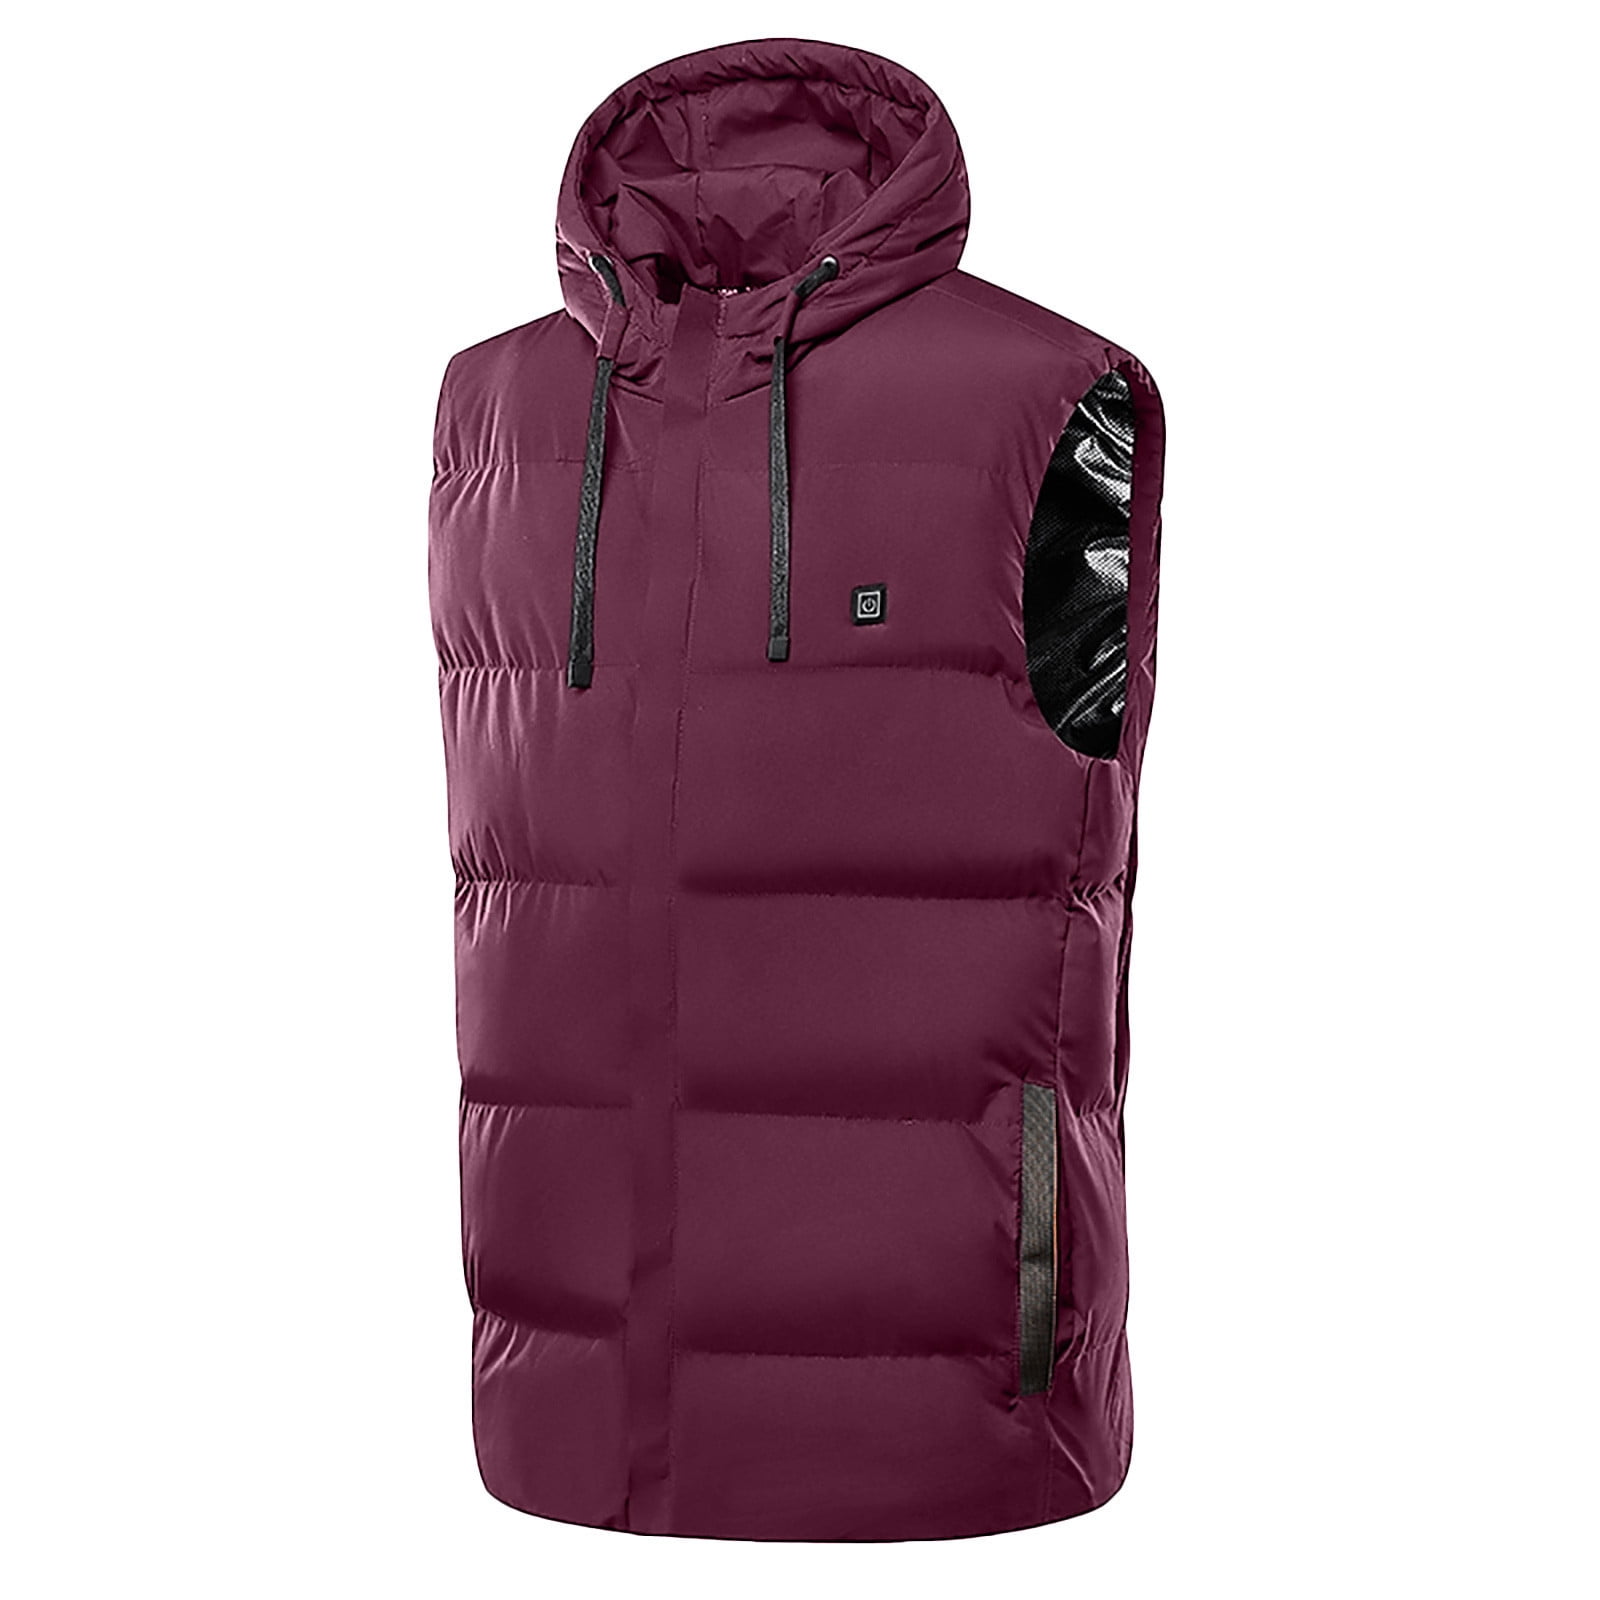 Leodye Mens Jacket Clearance Outdoor Warm Clothing Heated for Riding Skiing  Fishing Charging Via Heated Coat Wine 8(L) 